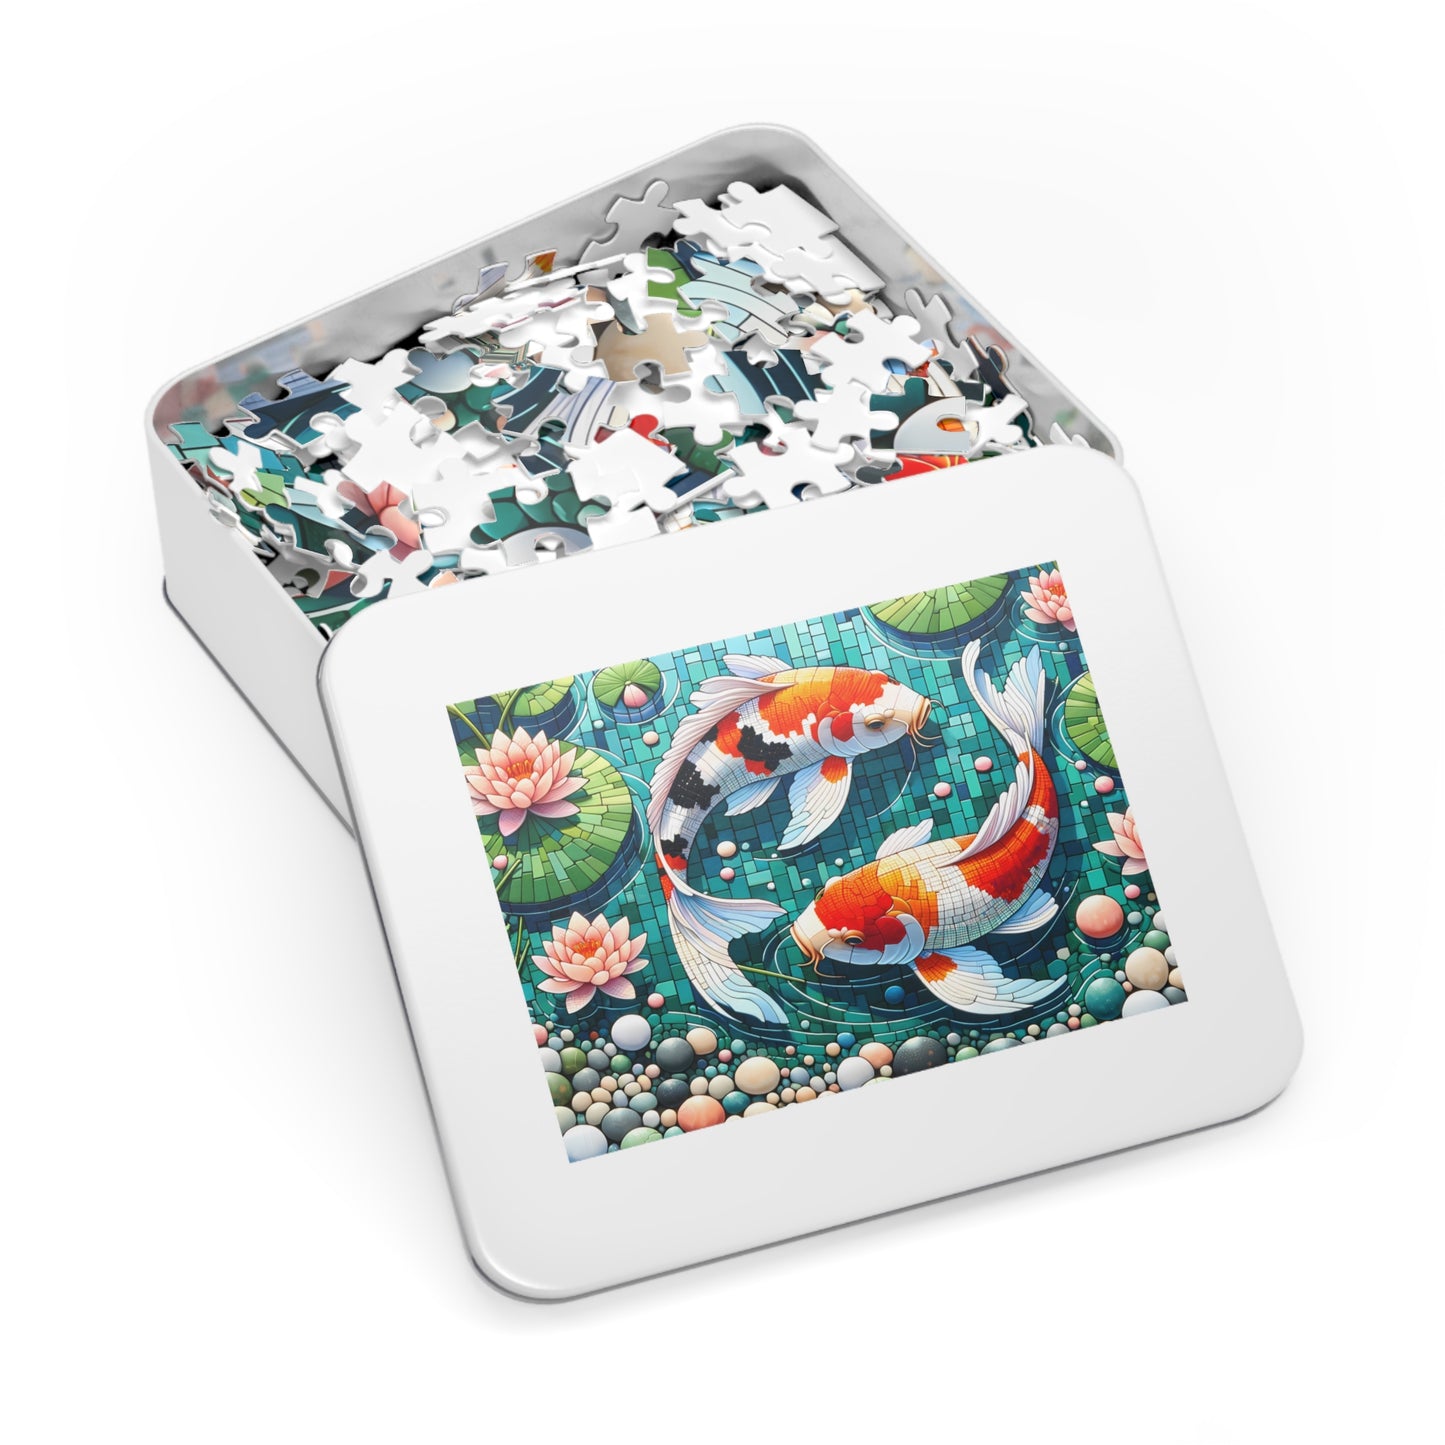 Koi Fish, Puzzle,  Mosiac, Unique, Jigsaw, Family, Adults (110, 252, 500, 1000-Piece)